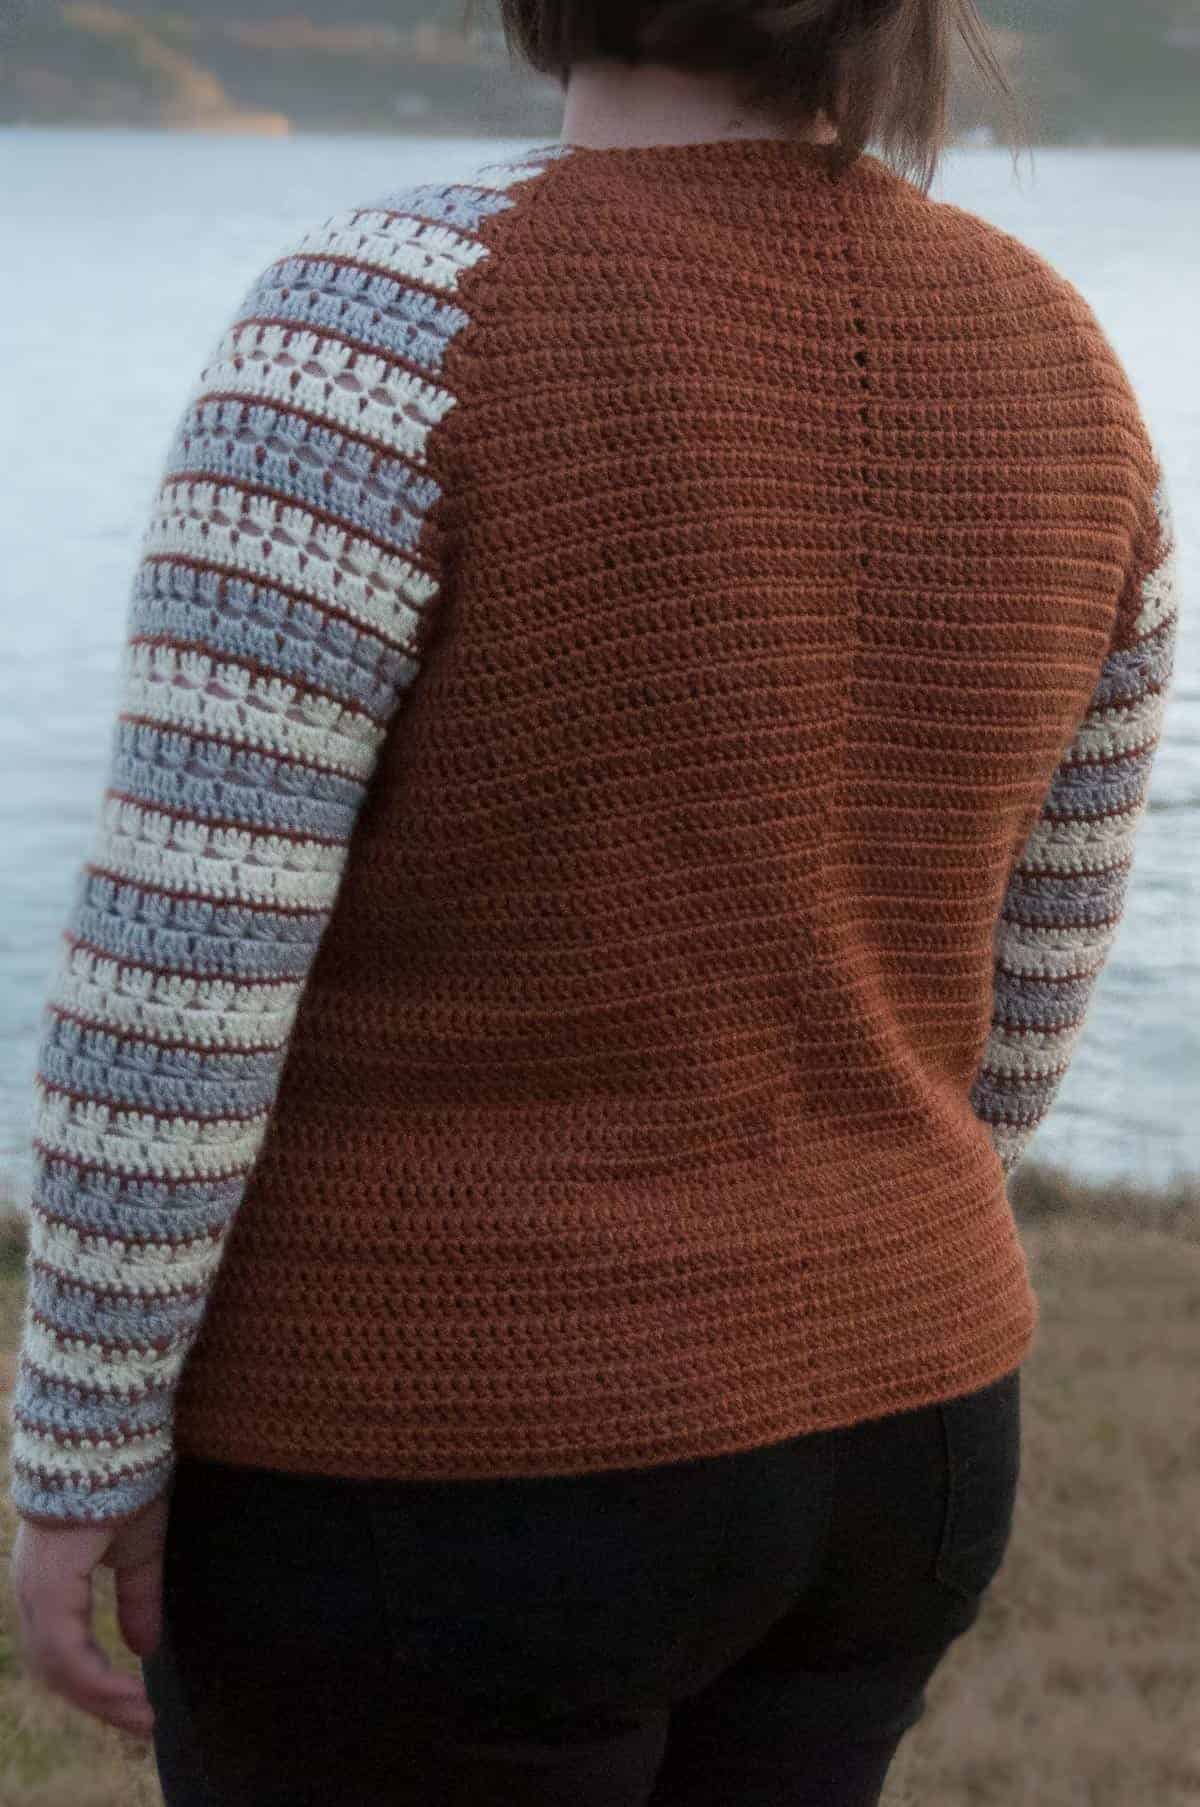 The Sleeves Raglan Crochet Pattern